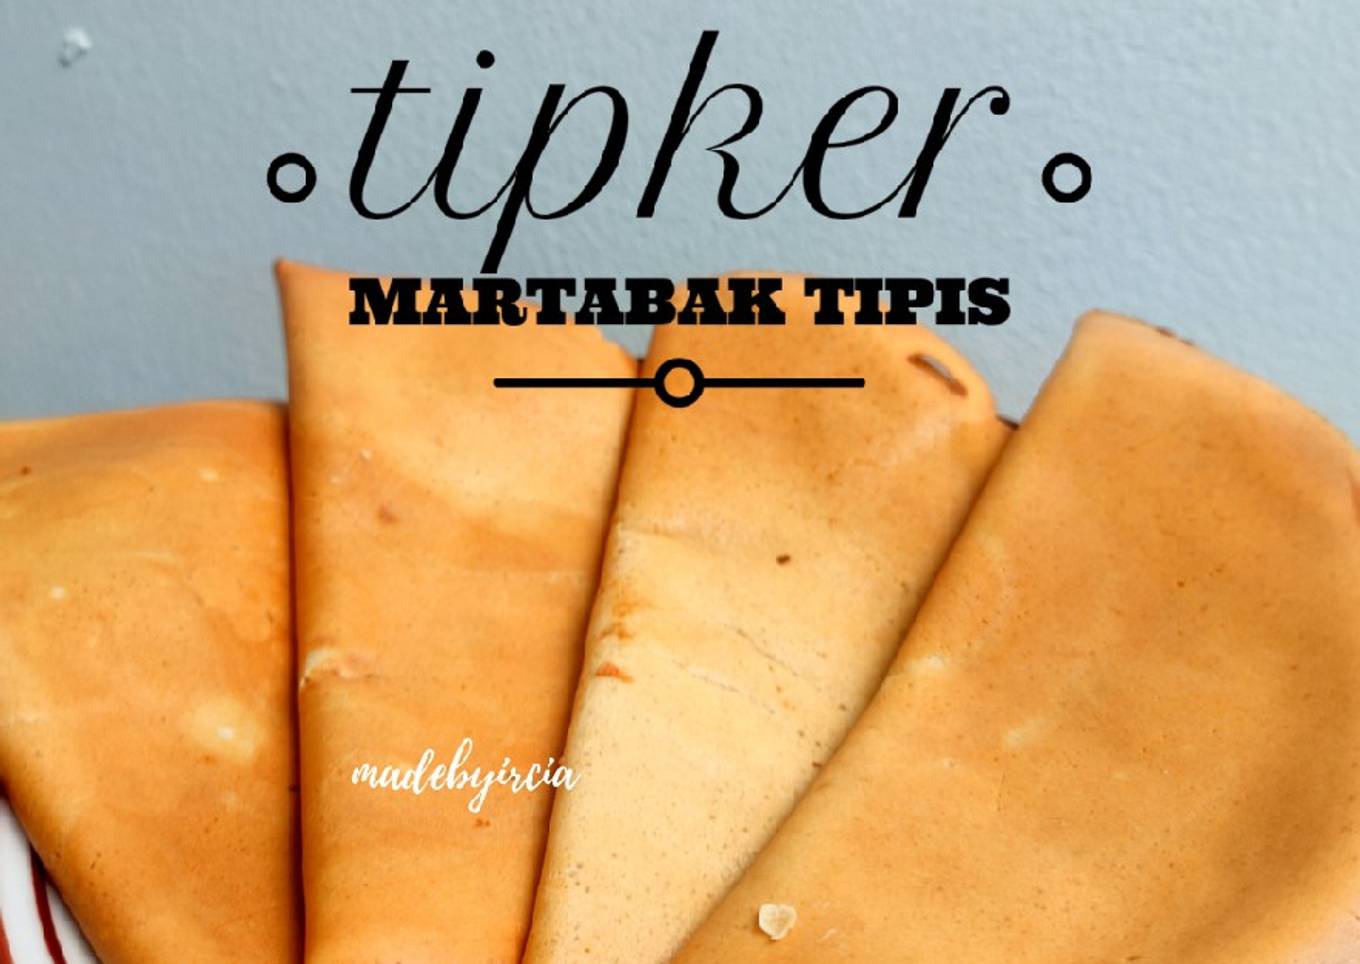 Tipker / Martabak Tipis / Crepes (madebyircia)